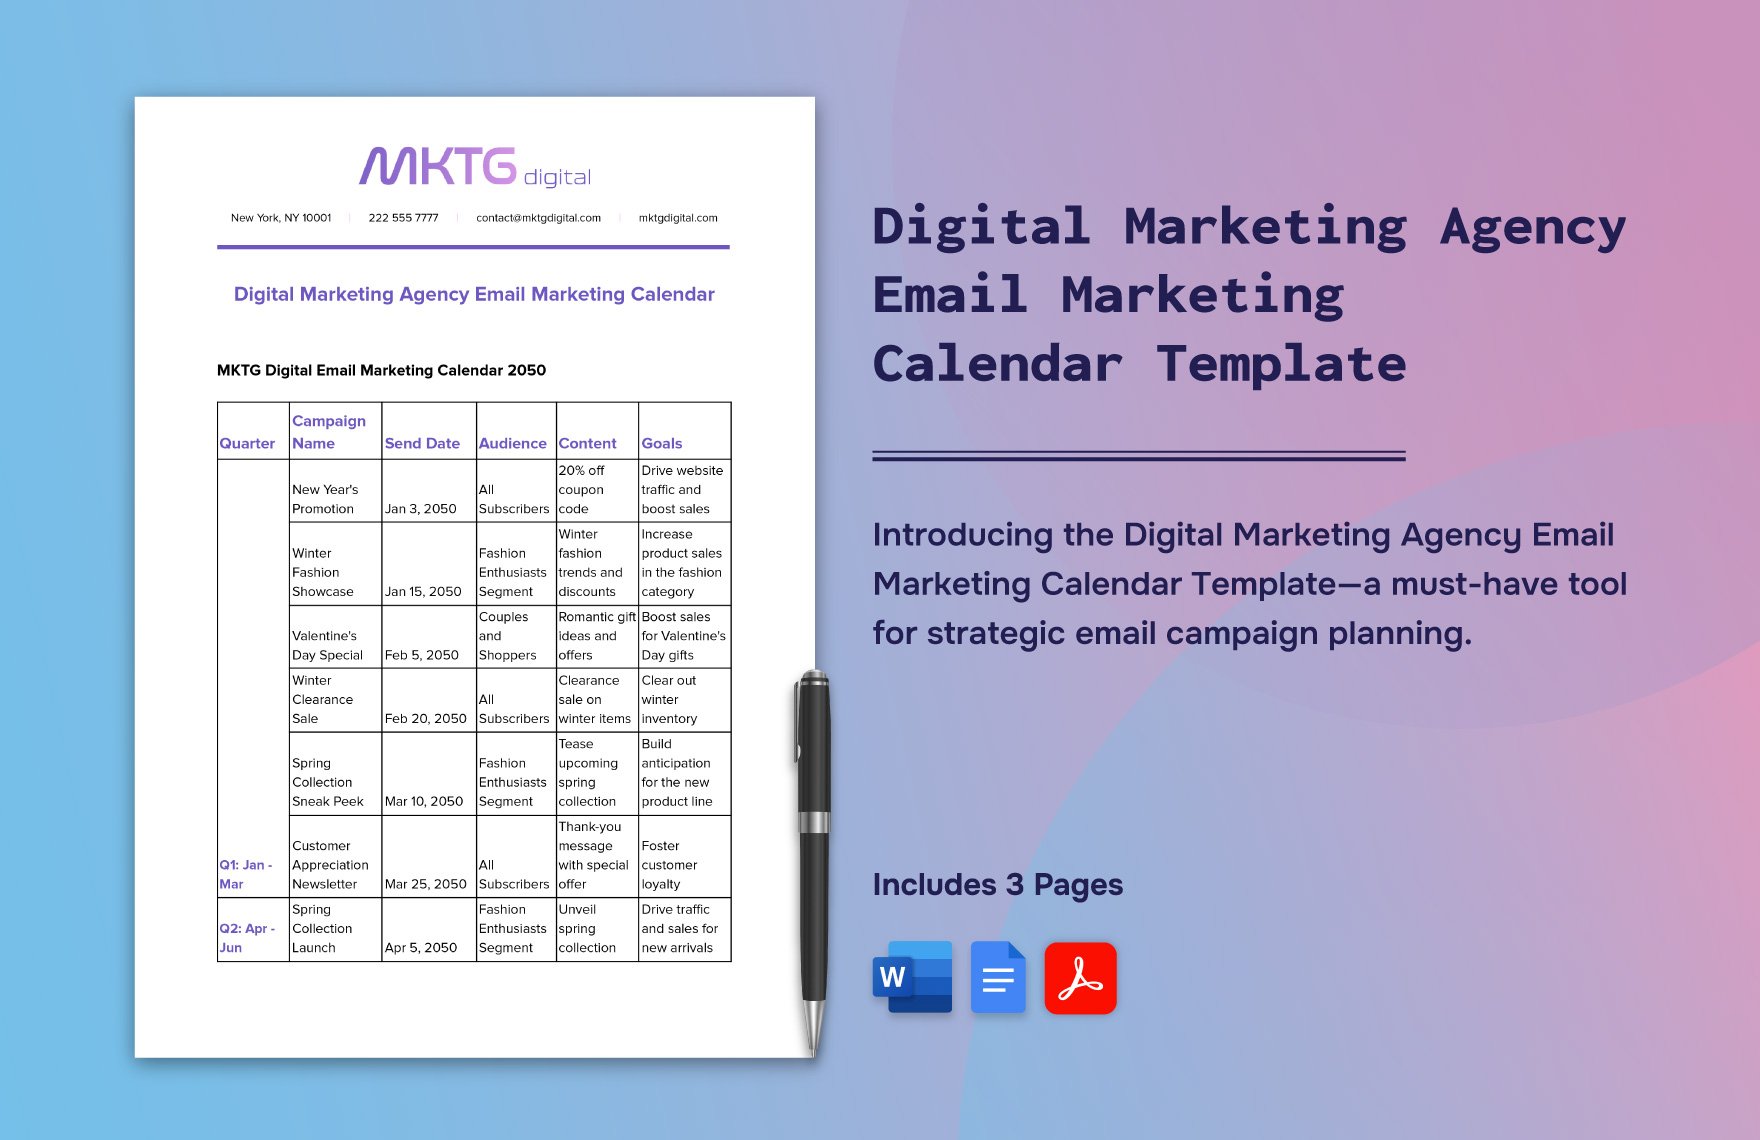 Digital Marketing Agency Email Marketing Calendar Template in Word, Google Docs, PDF